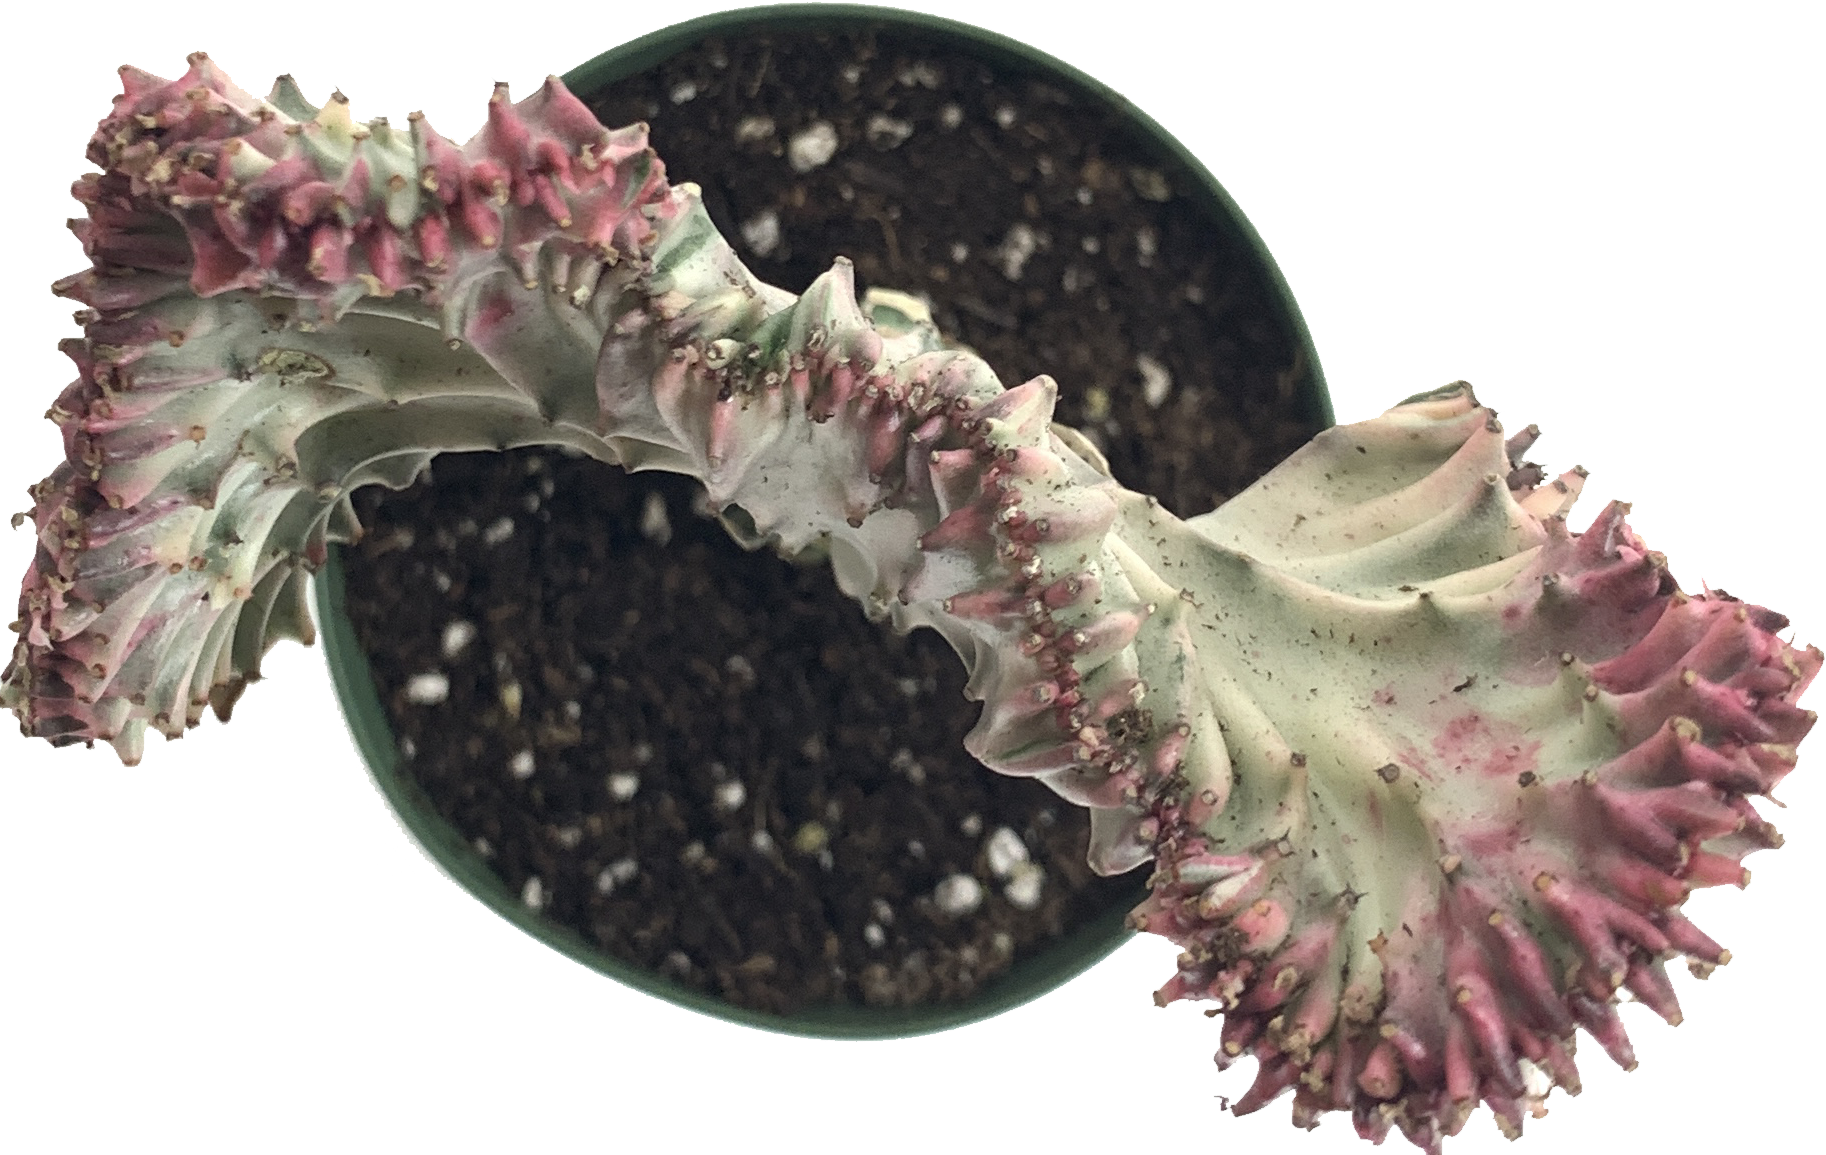 Crested Coral Cactus, Euphorbia Lactea Cristata Variegata